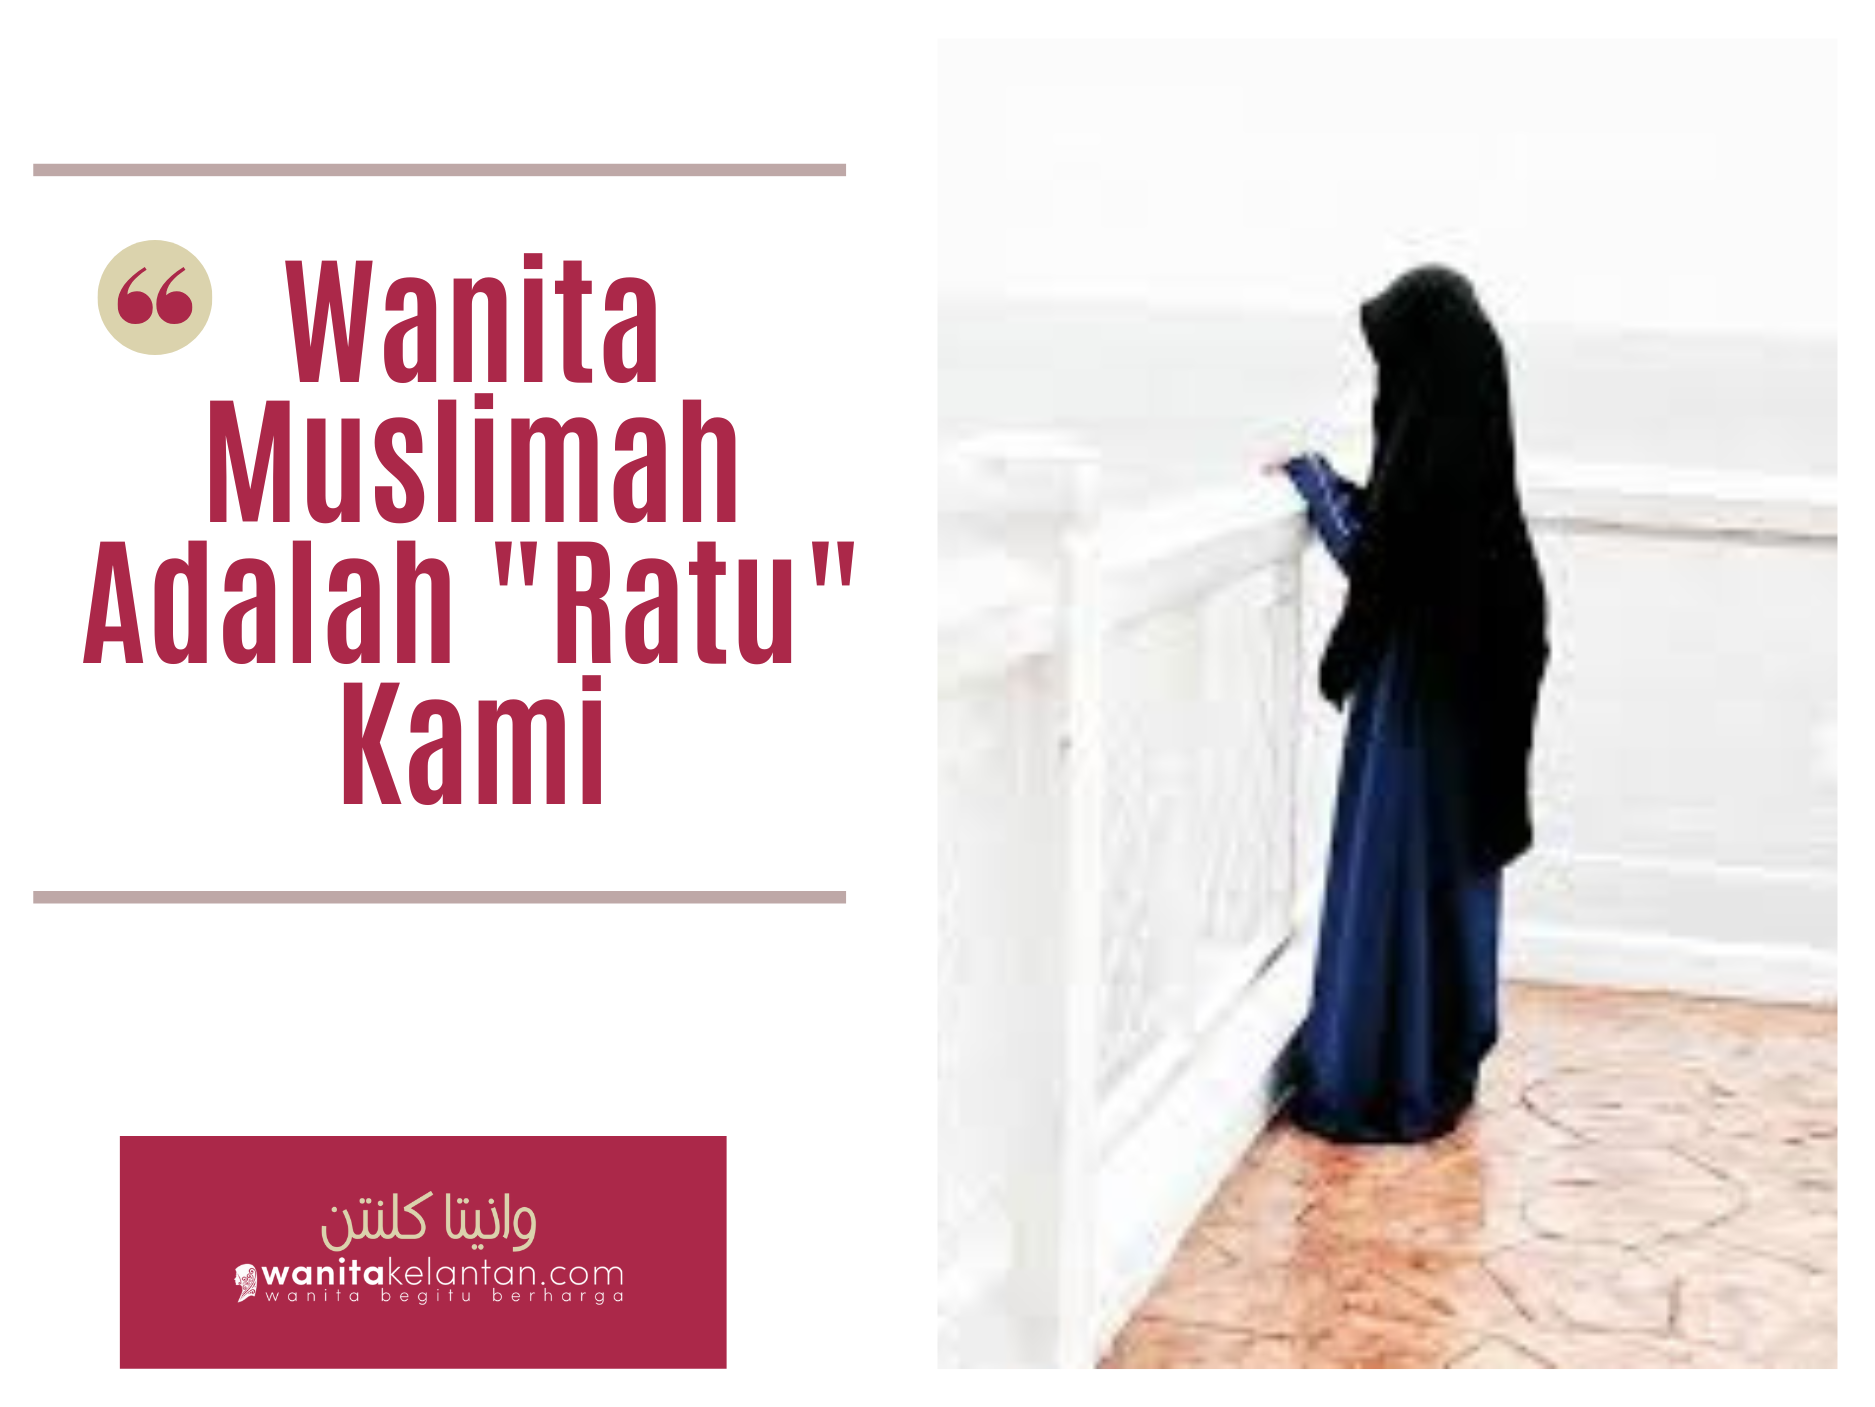 Wanita Muslimah Adalah “Ratu” Kami